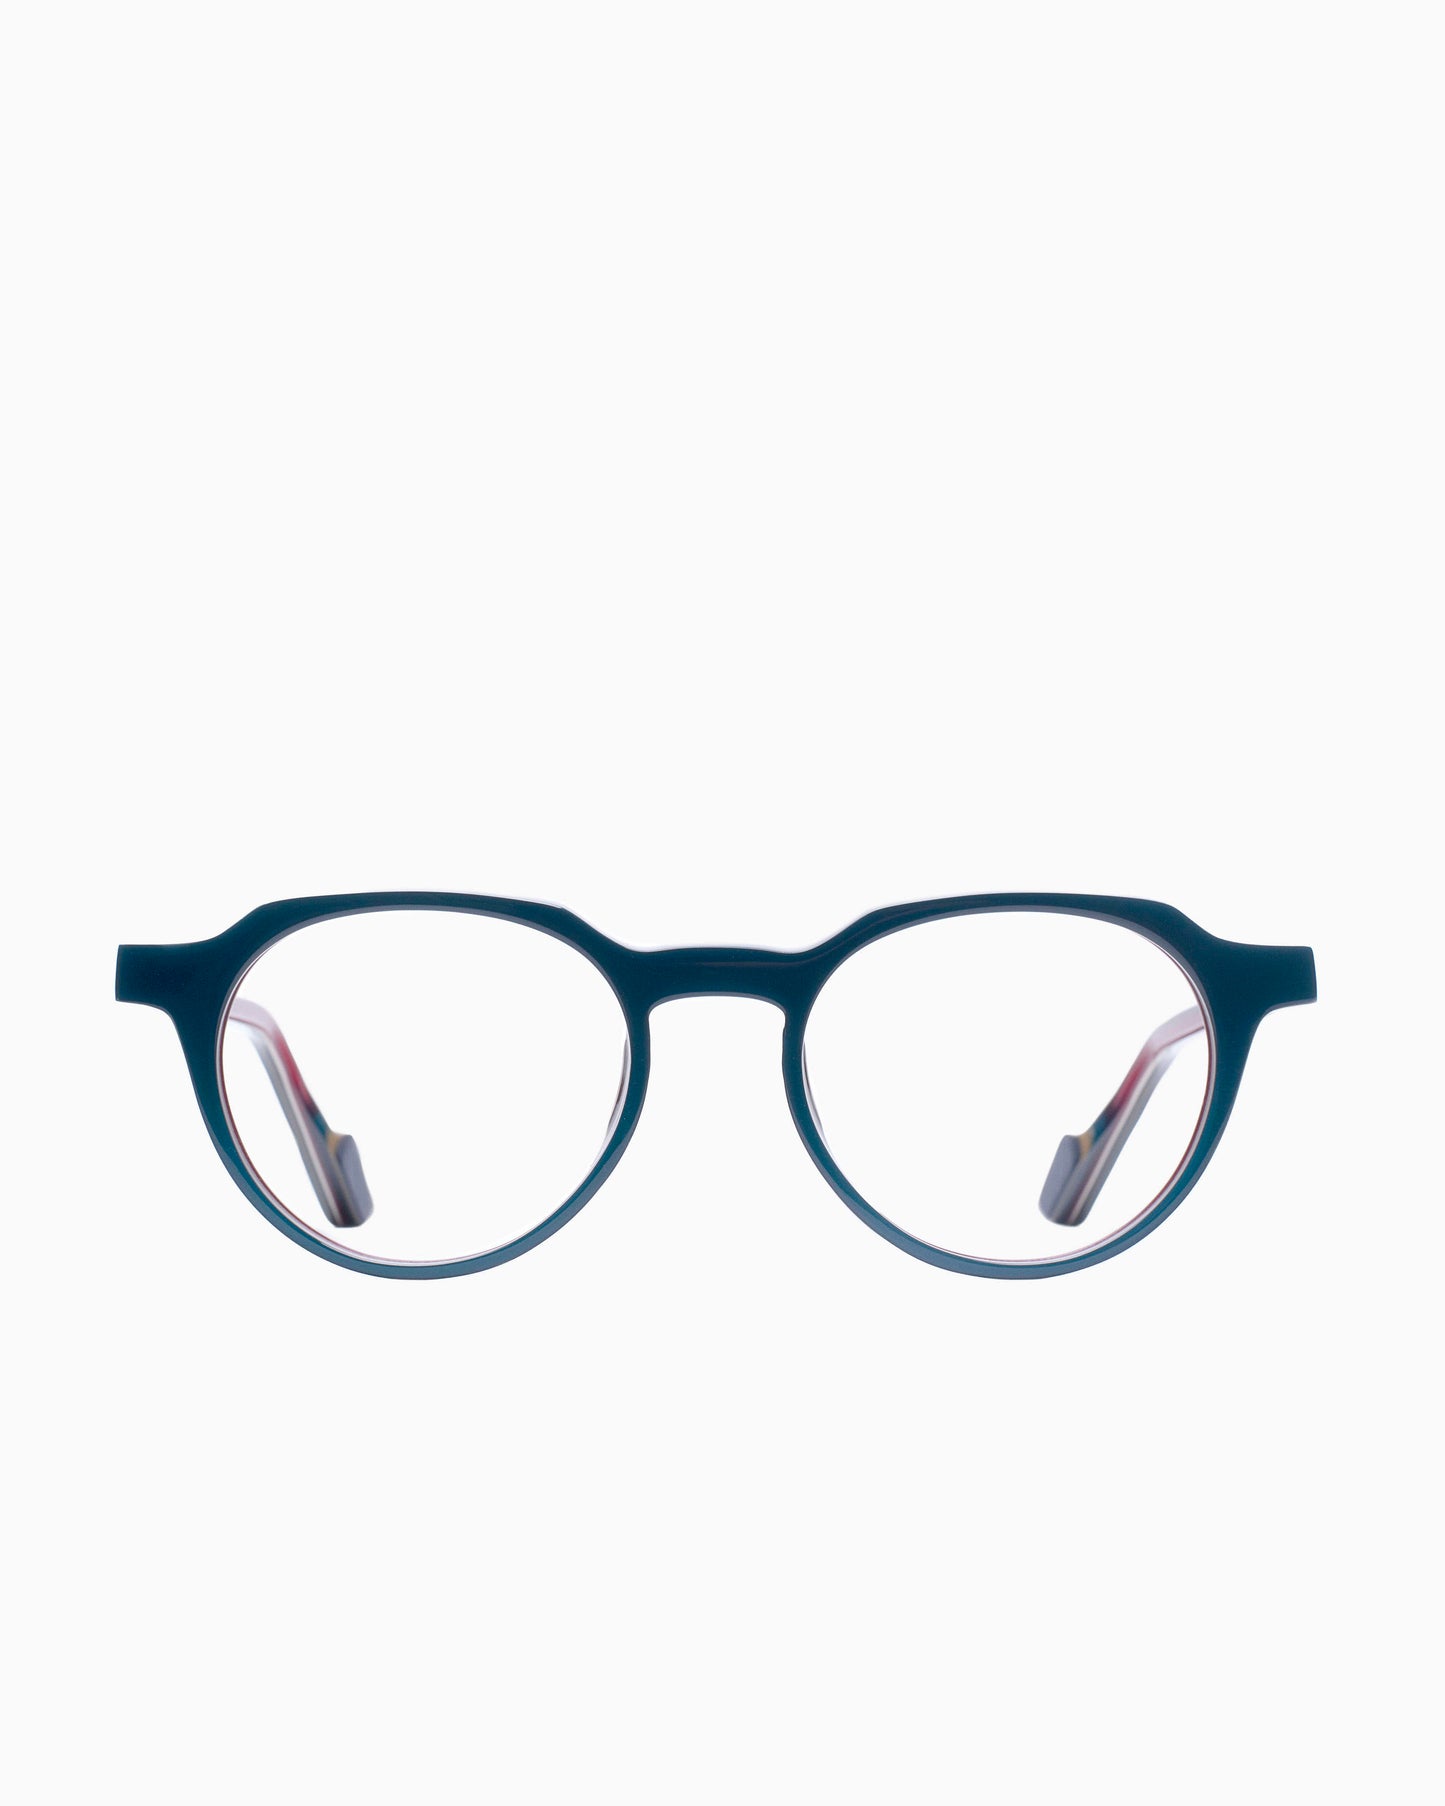 Eyewear Xavier Derome - Alcohol16 - blue | glasses bar